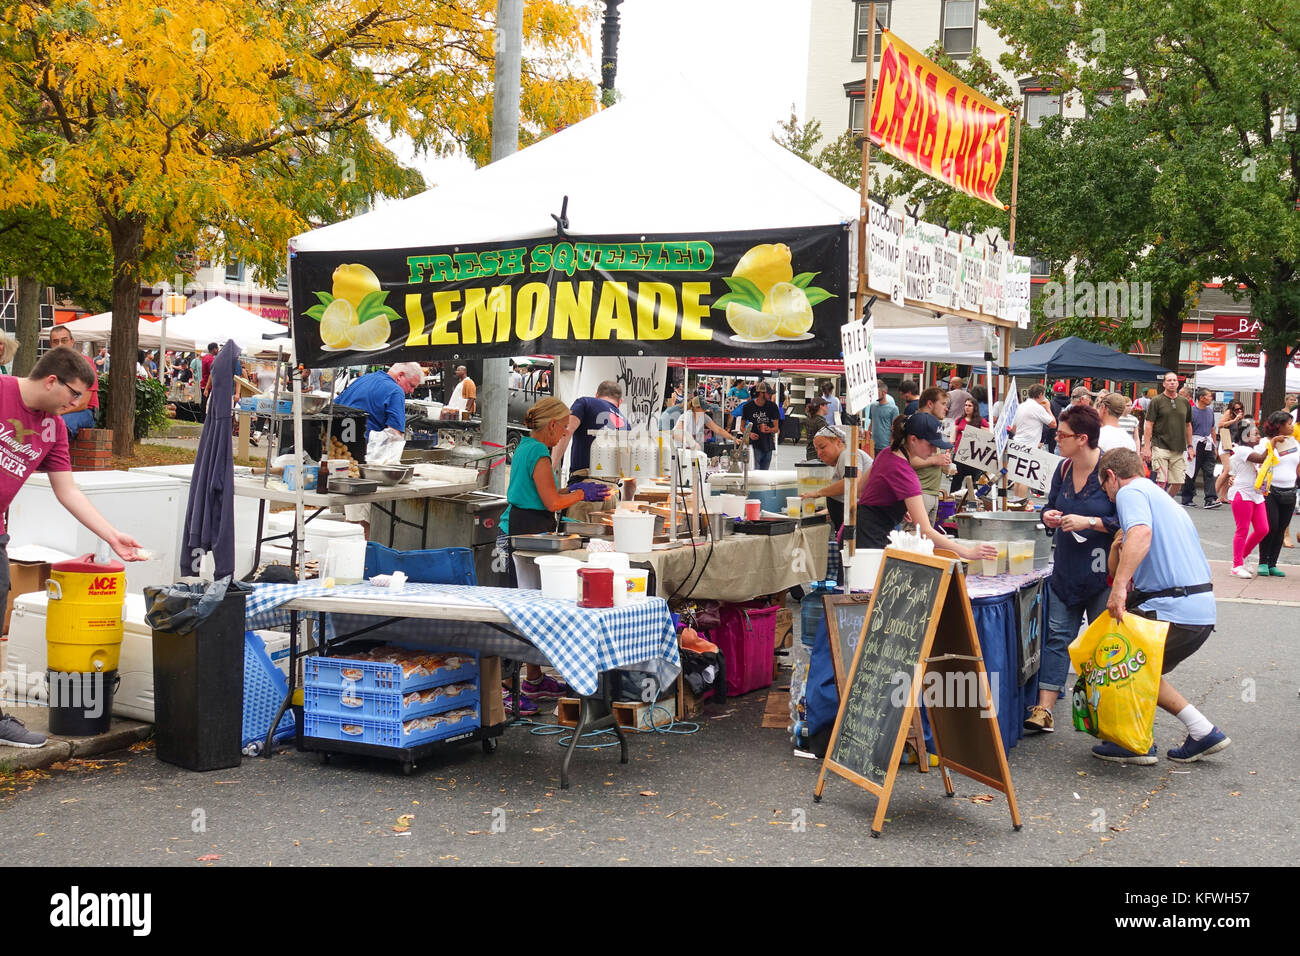 Lemonade stand, stall at the Garlic fest 2017, Easton, Pennsylvania, United states. Stock Photo